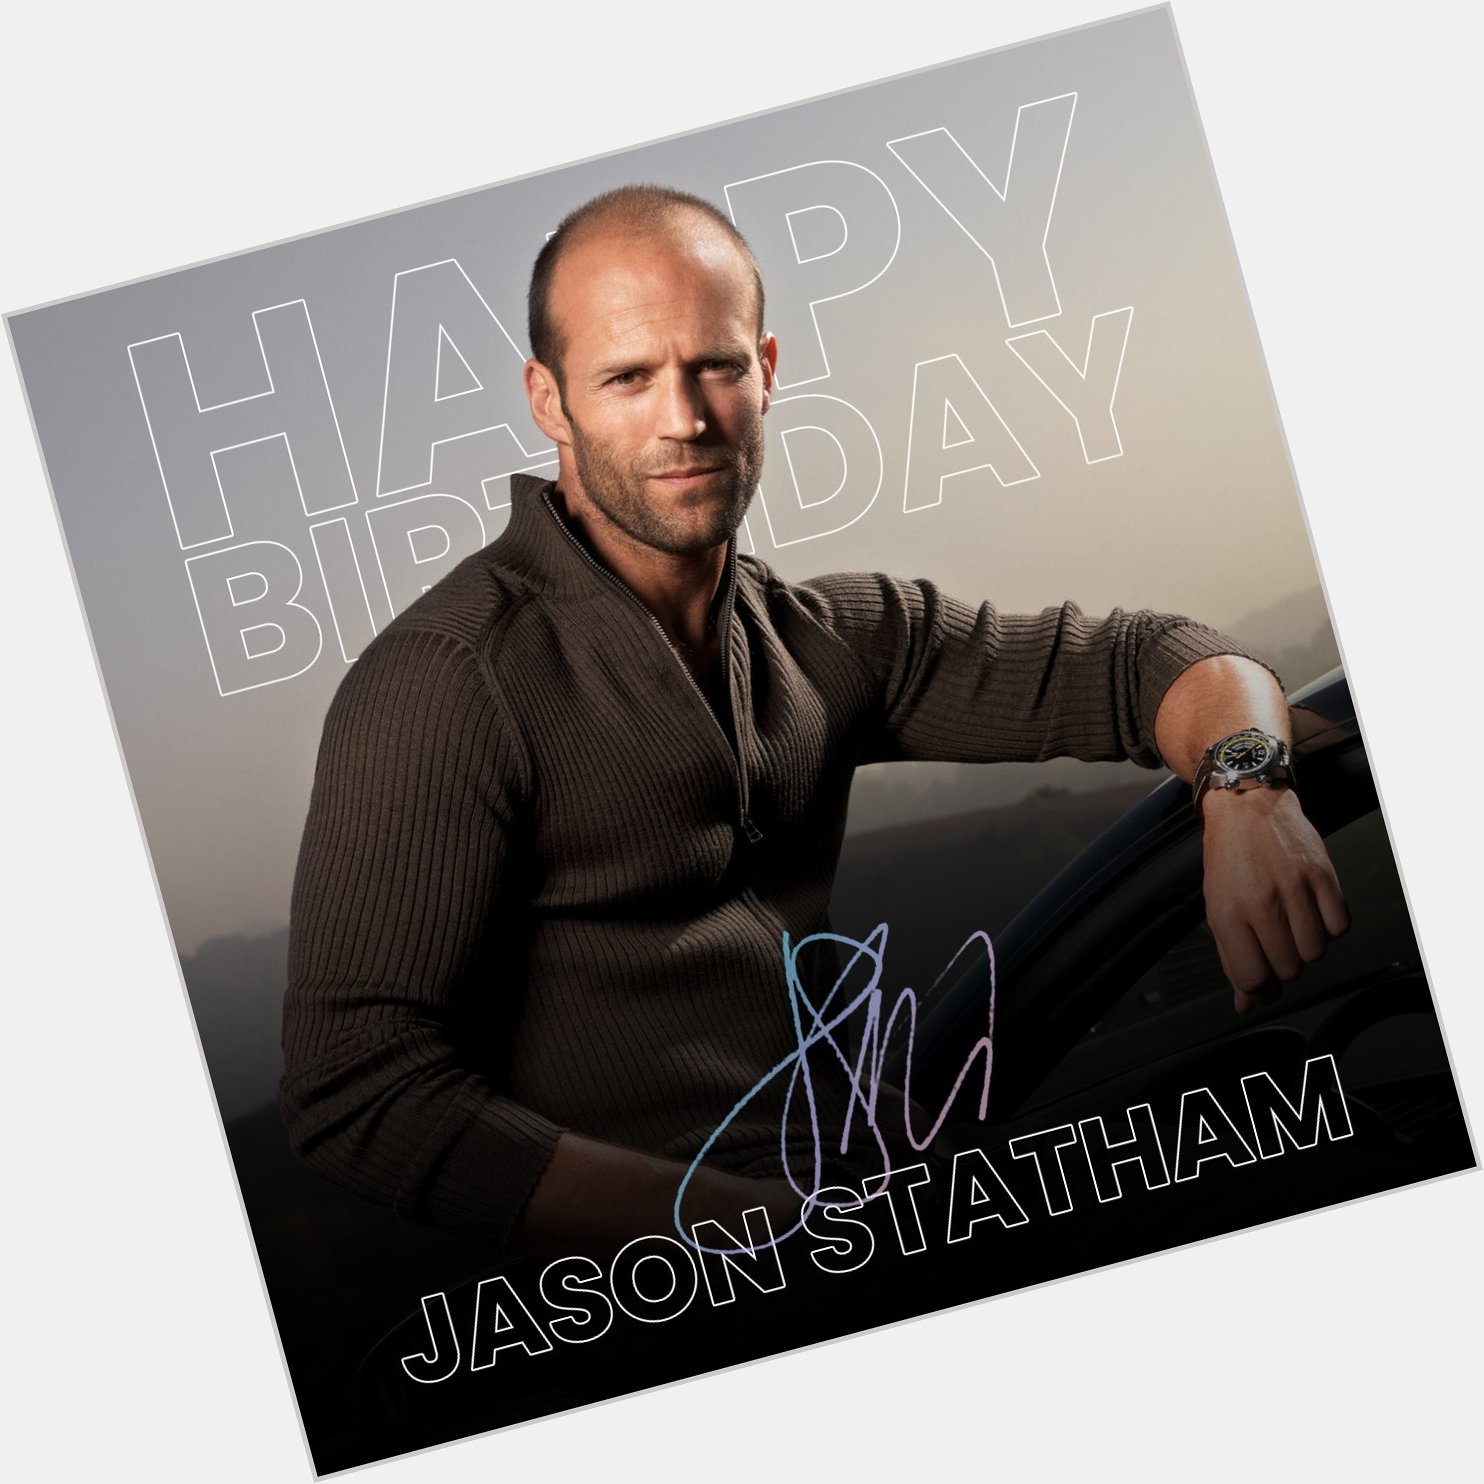 Happy Birthday to Jason Statham! What\s your favorite film? 